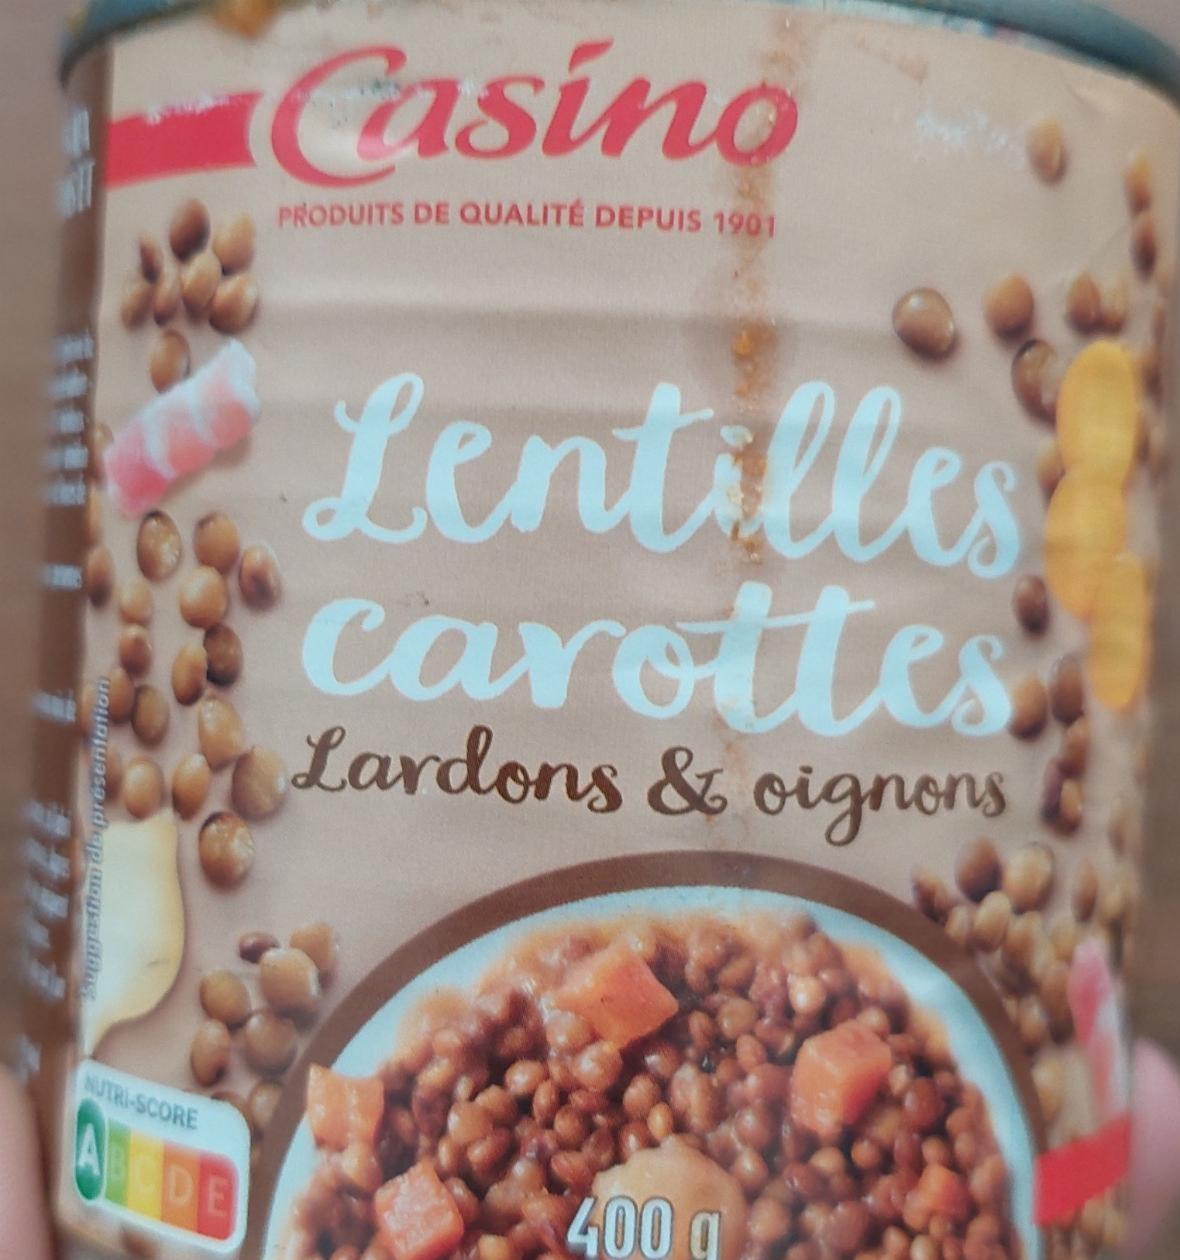 Fotografie - Lentilles Carottes Lardons & Oignons Casino